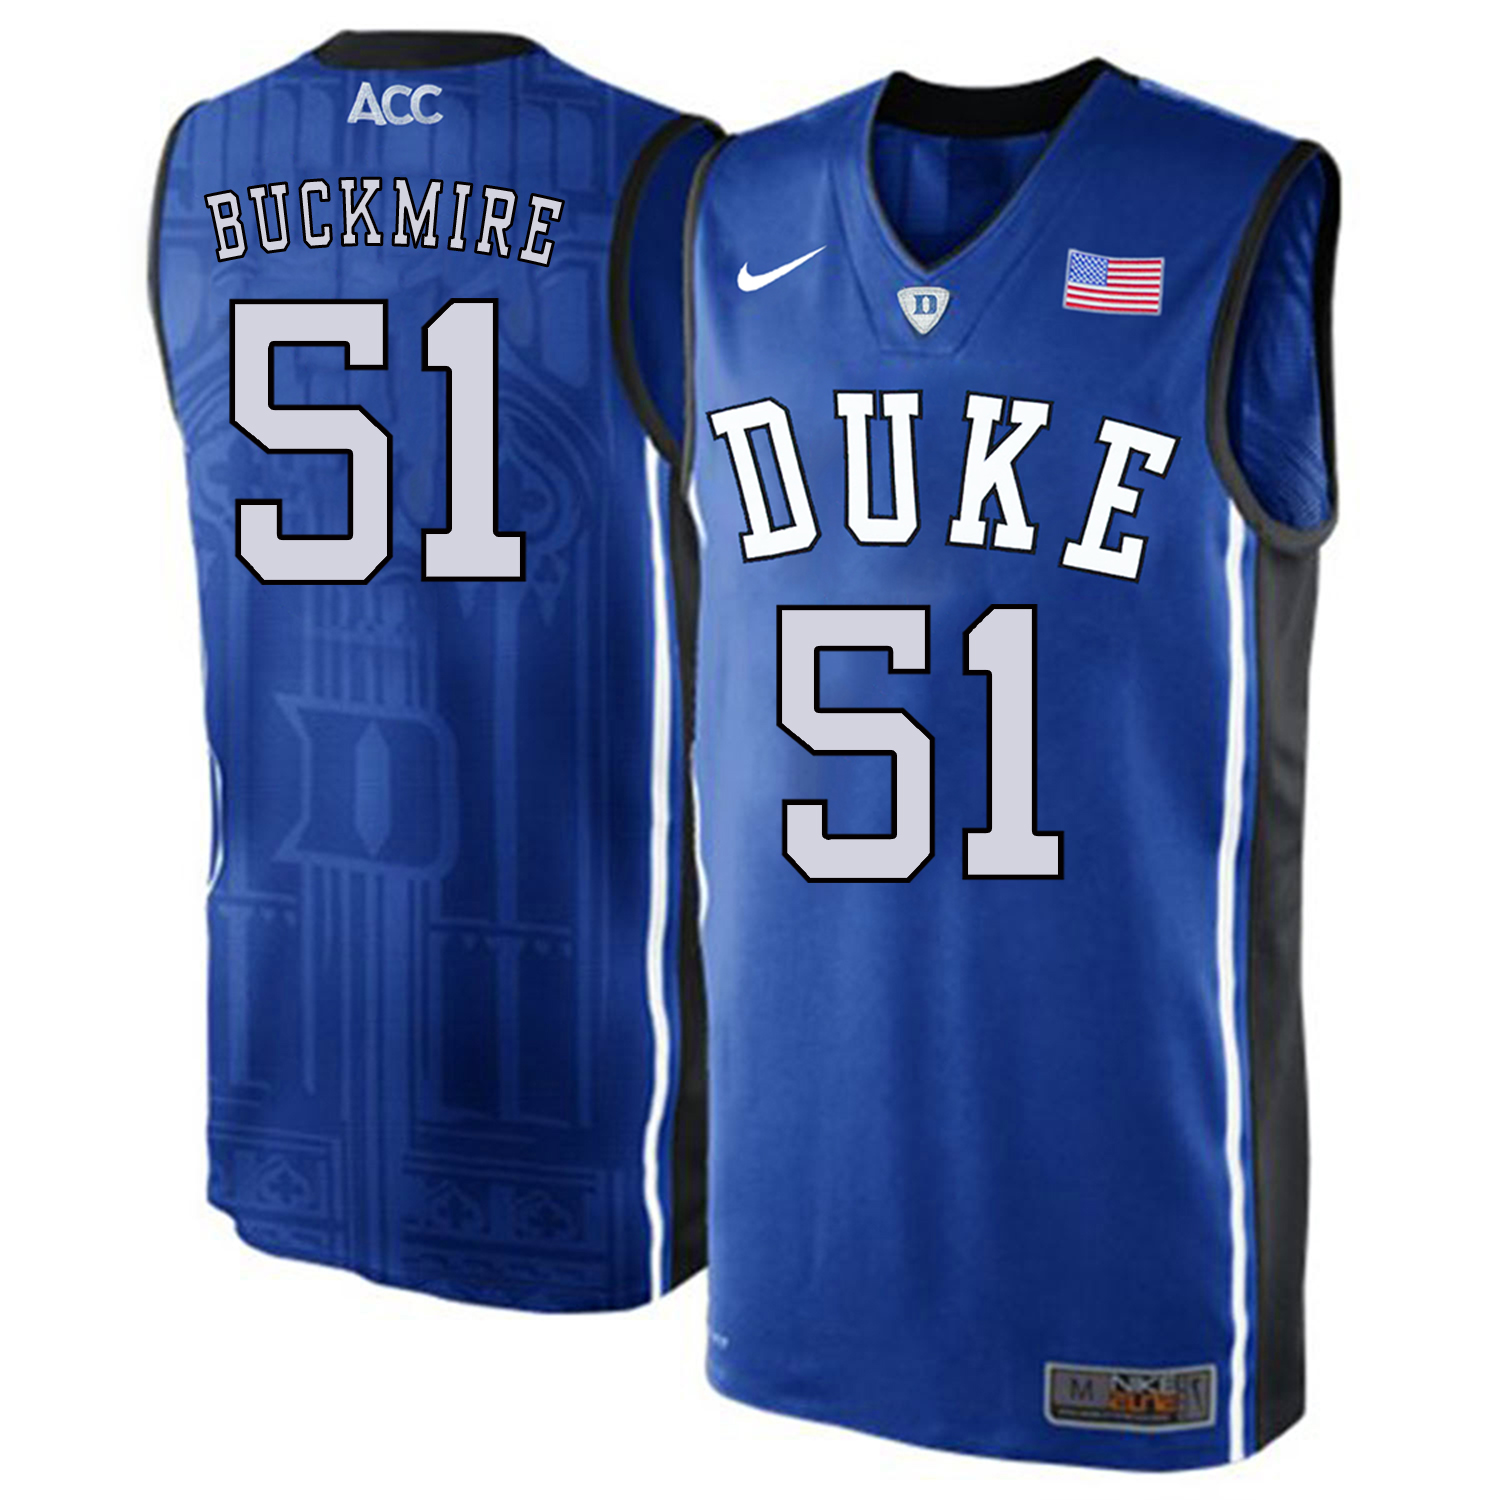 Duke Blue Devils 51 Mike Buckmire Blue Elite Nike College Basketball Jersey